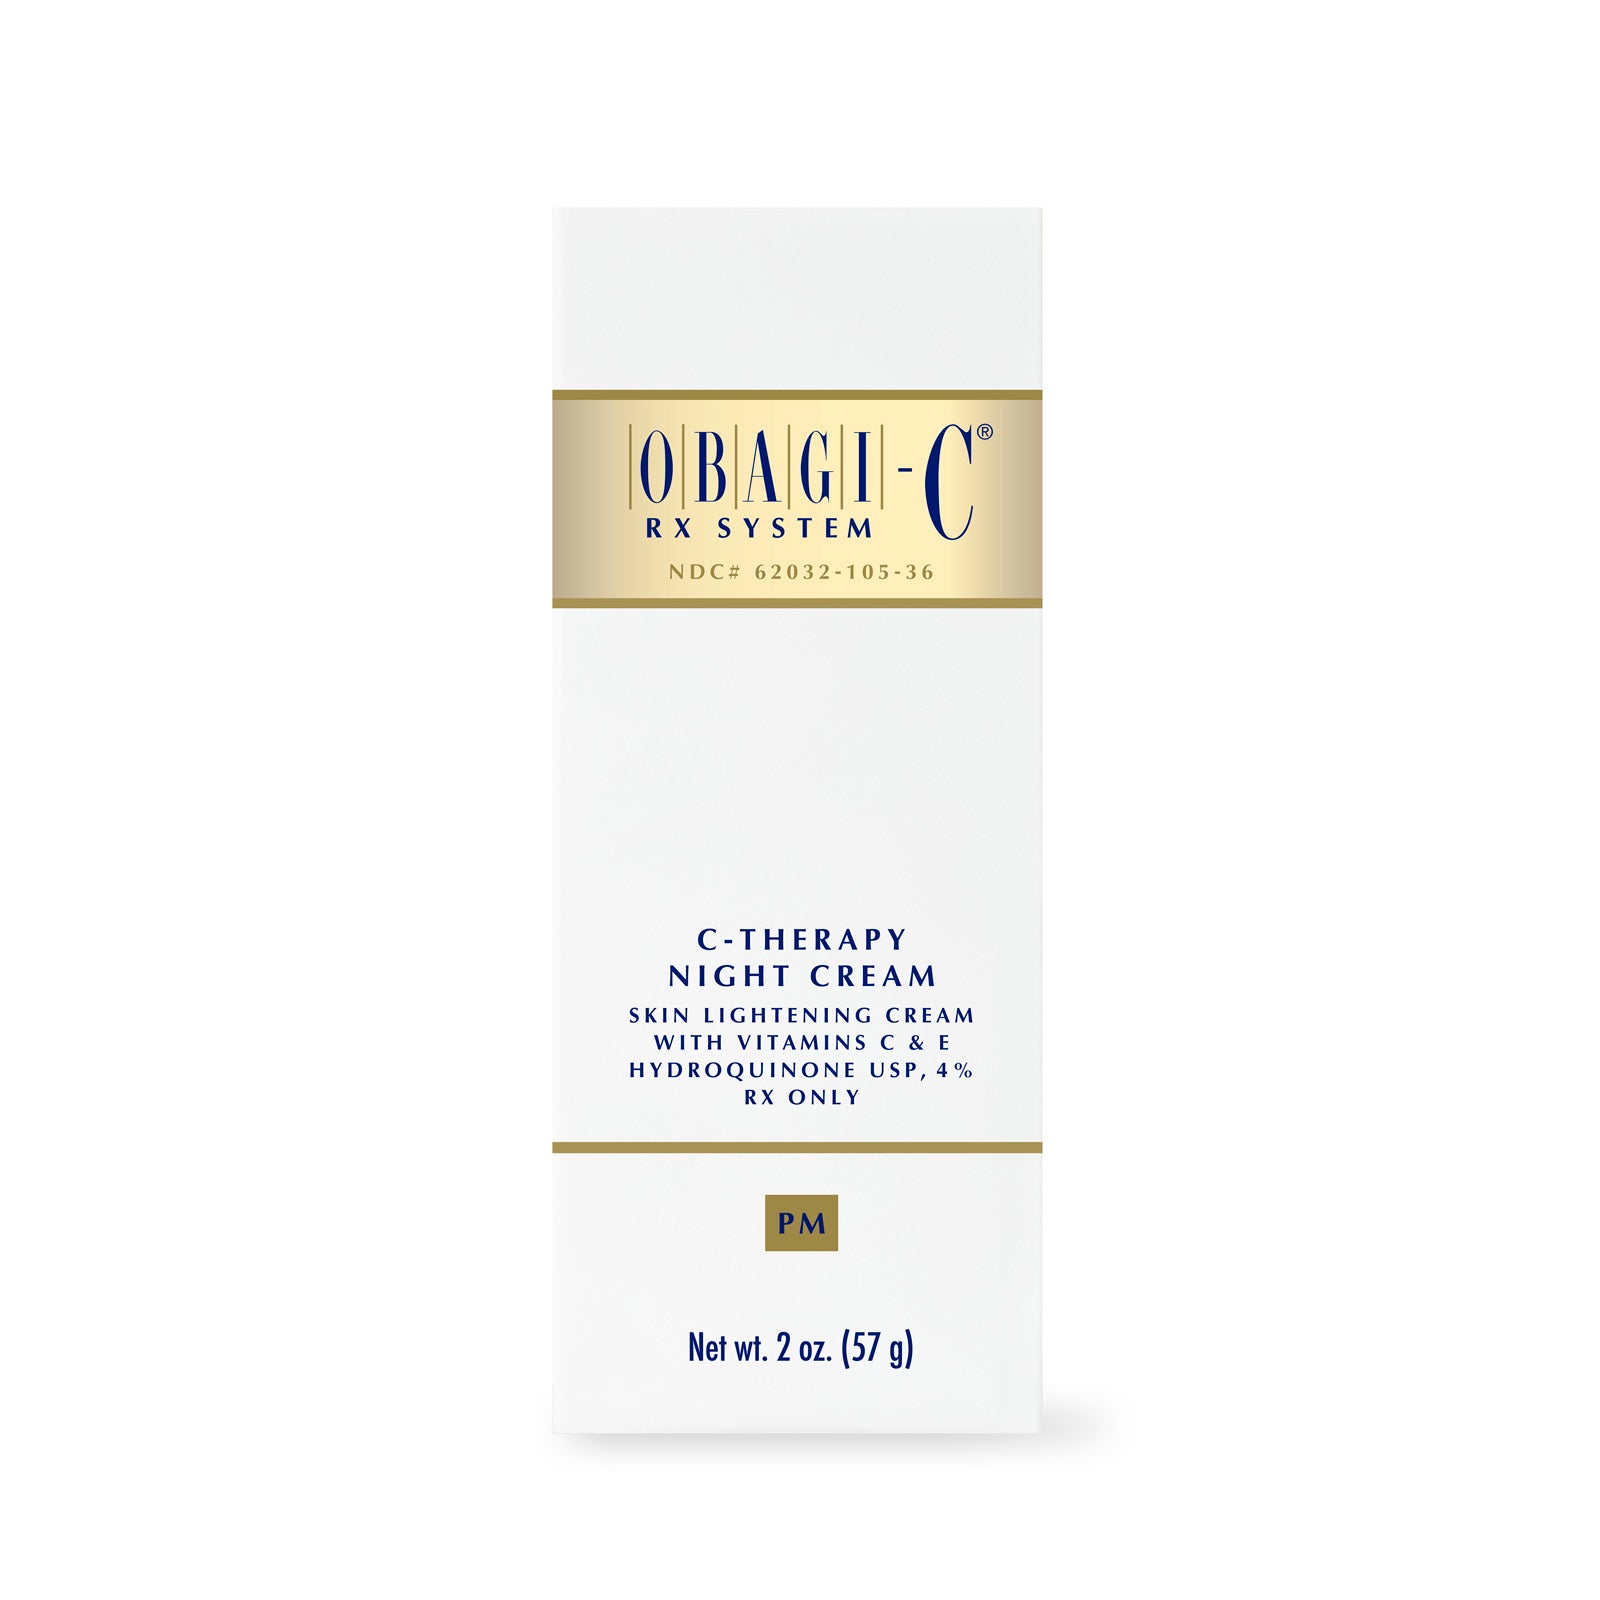 Obagi-C Rx C-Therapy Night Cream 2.0 oz - Dark spot lightening night cream and moisturizer - Beauty By Vianna